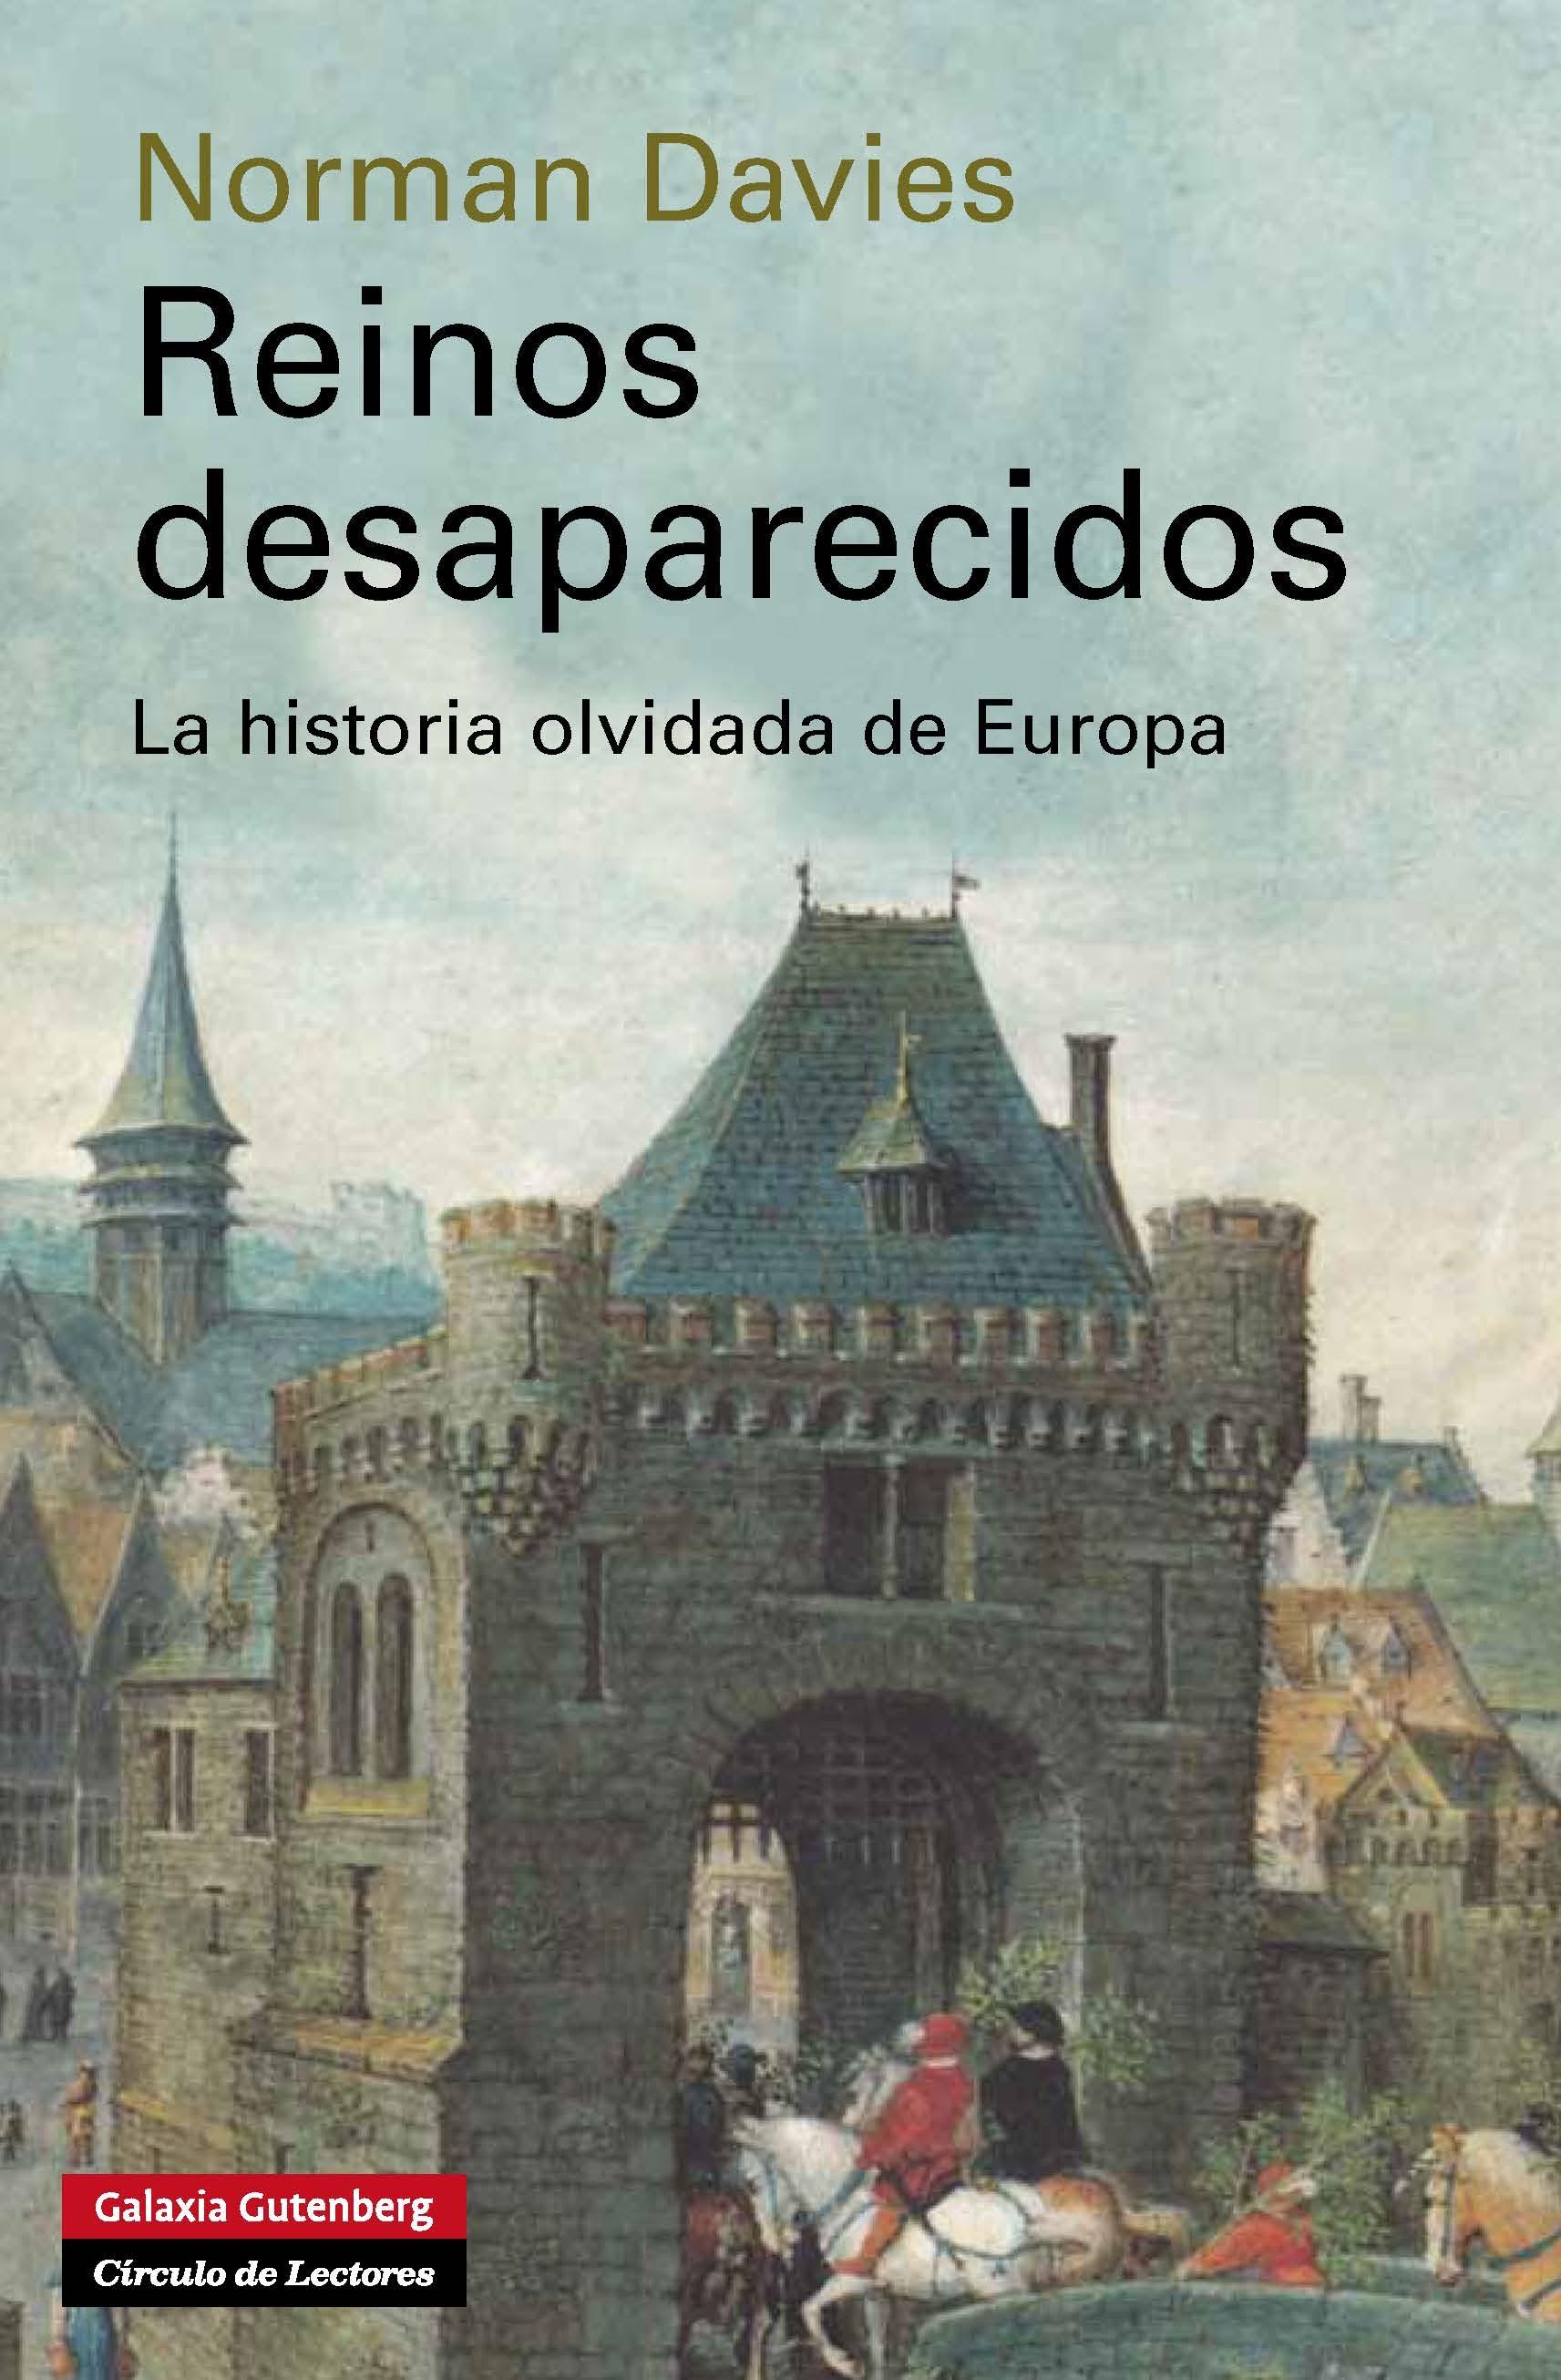 Reinos desaparecidos "La historia olvidada de Europa"